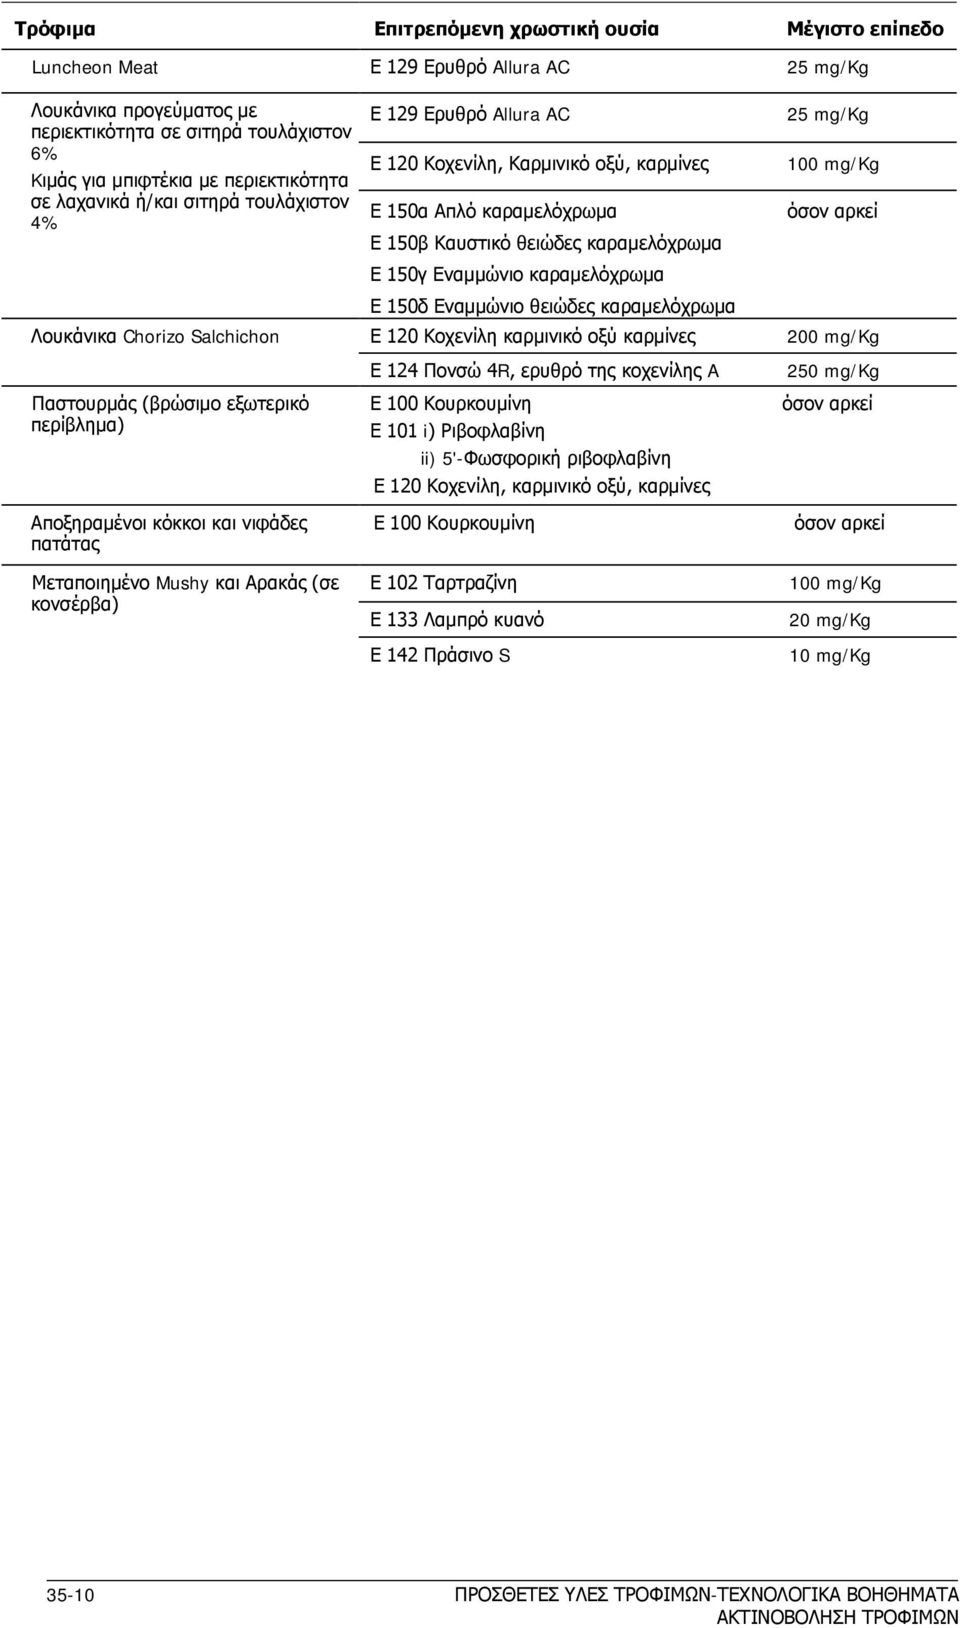 mg/kg Παστουρμάς (βρώσιμο εξωτερικό περίβλημα) Αποξηραμένοι κόκκοι και νιφάδες πατάτας Ε 124 Πονσώ 4R, ερυθρό της κοχενίλης A Ε 100 Κουρκουμίνη Ε 101 i) Ριβοφλαβίνη ii) 5'-Φωσφορική ριβοφλαβίνη Ε 120